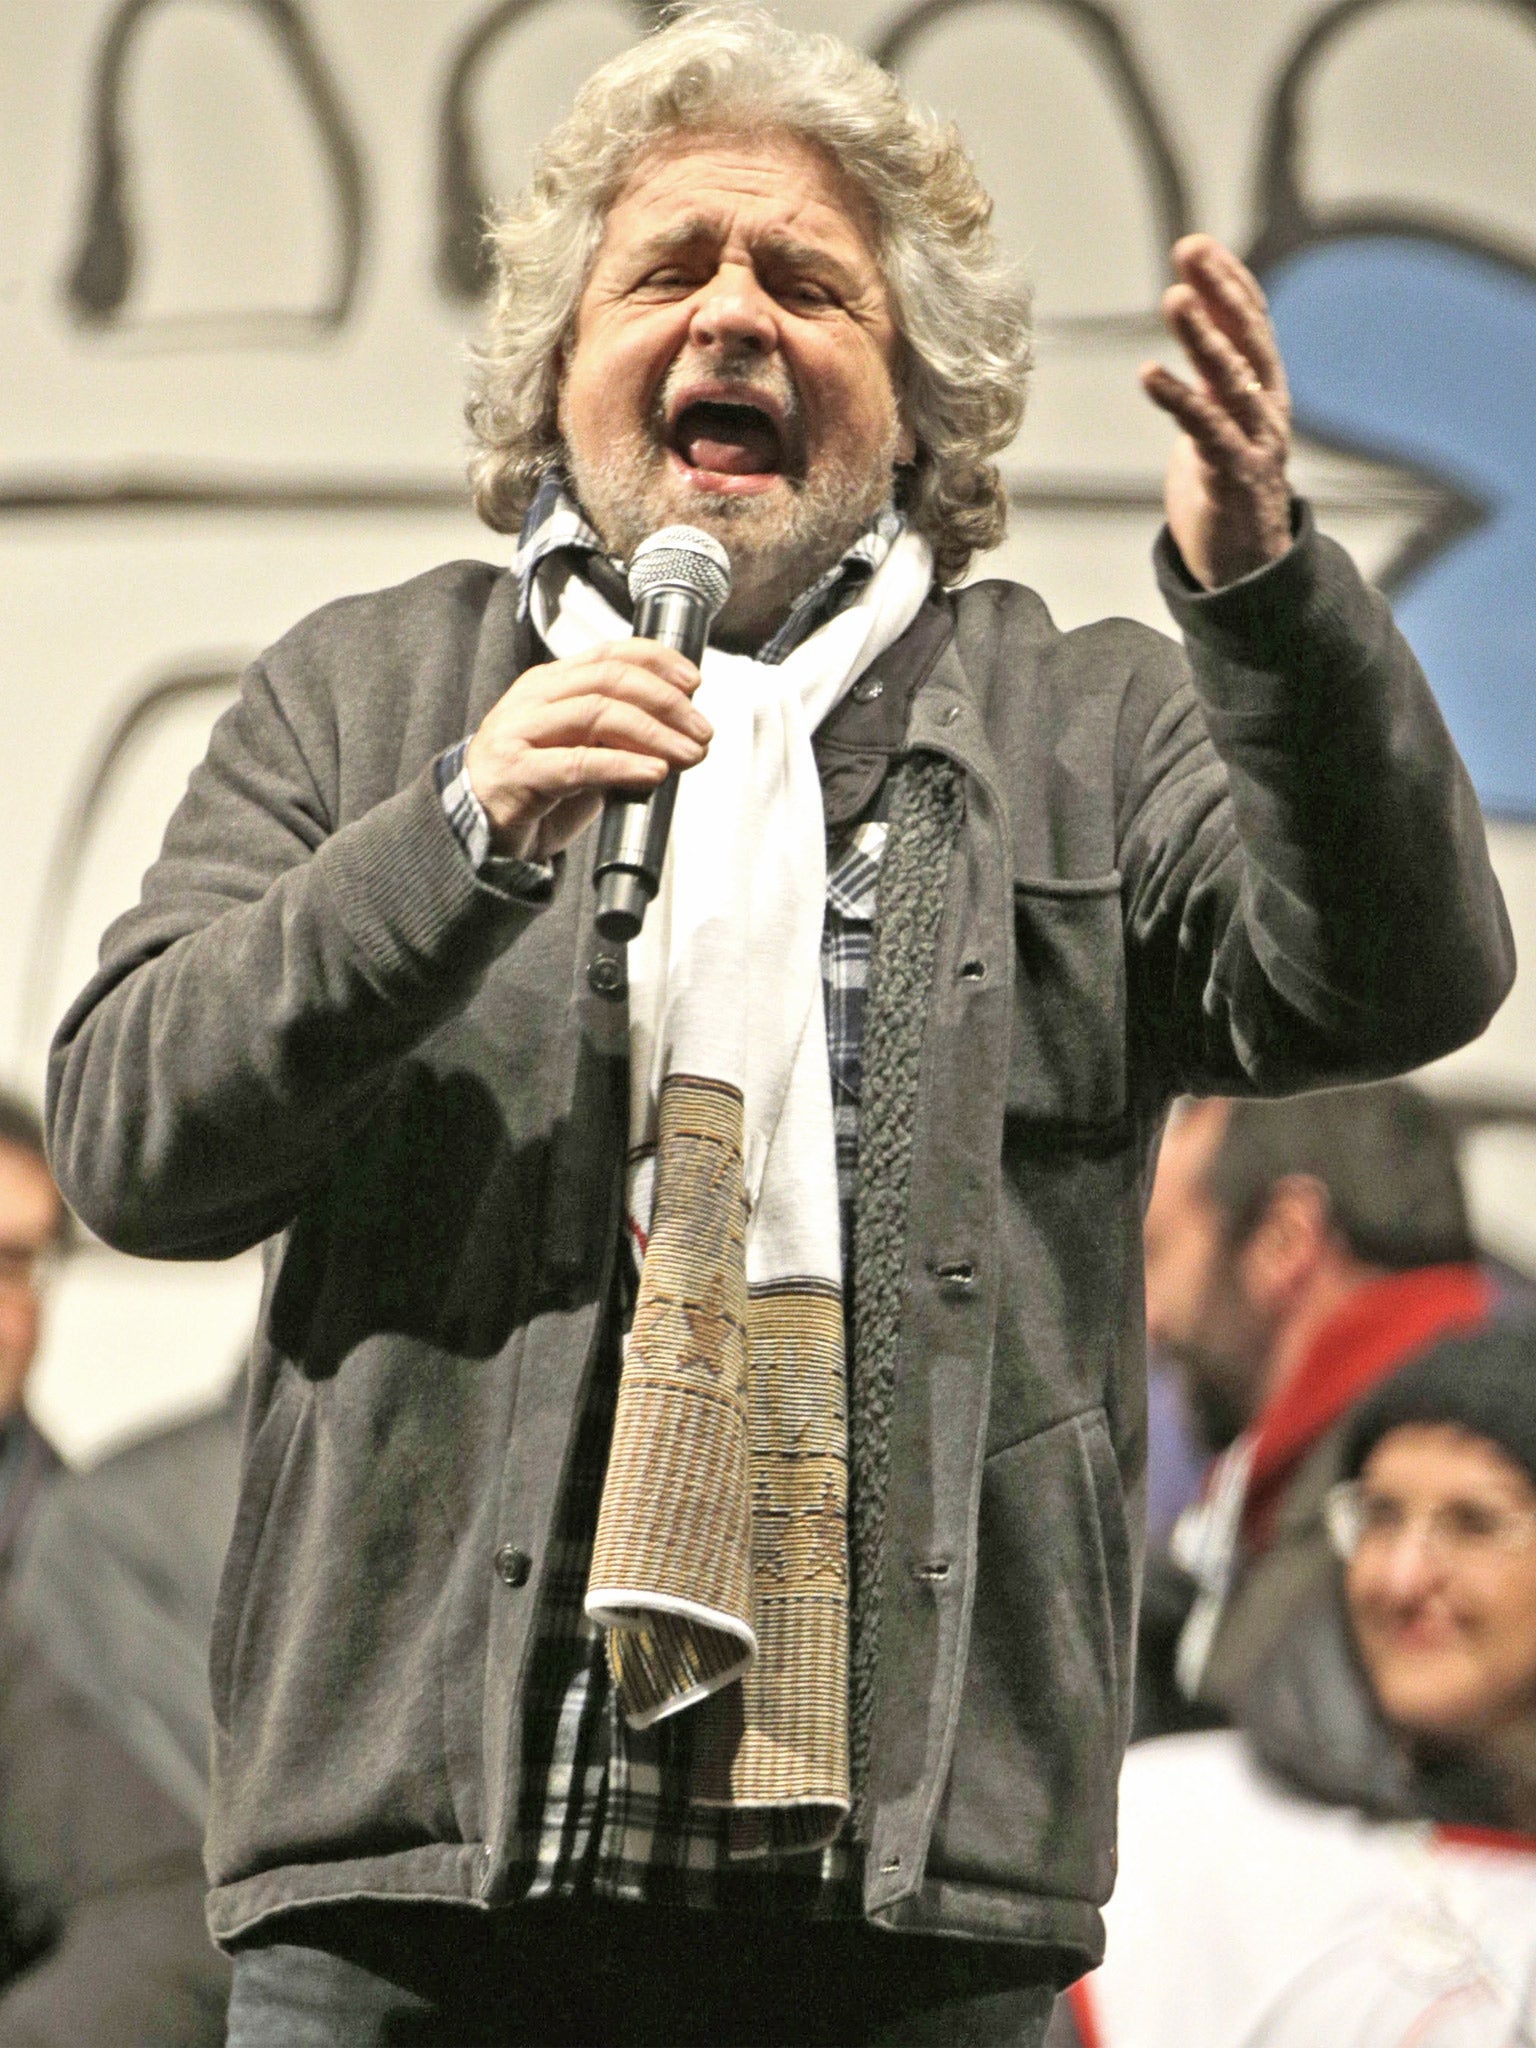 Italian comic-turned-political activist, Beppe Grillo